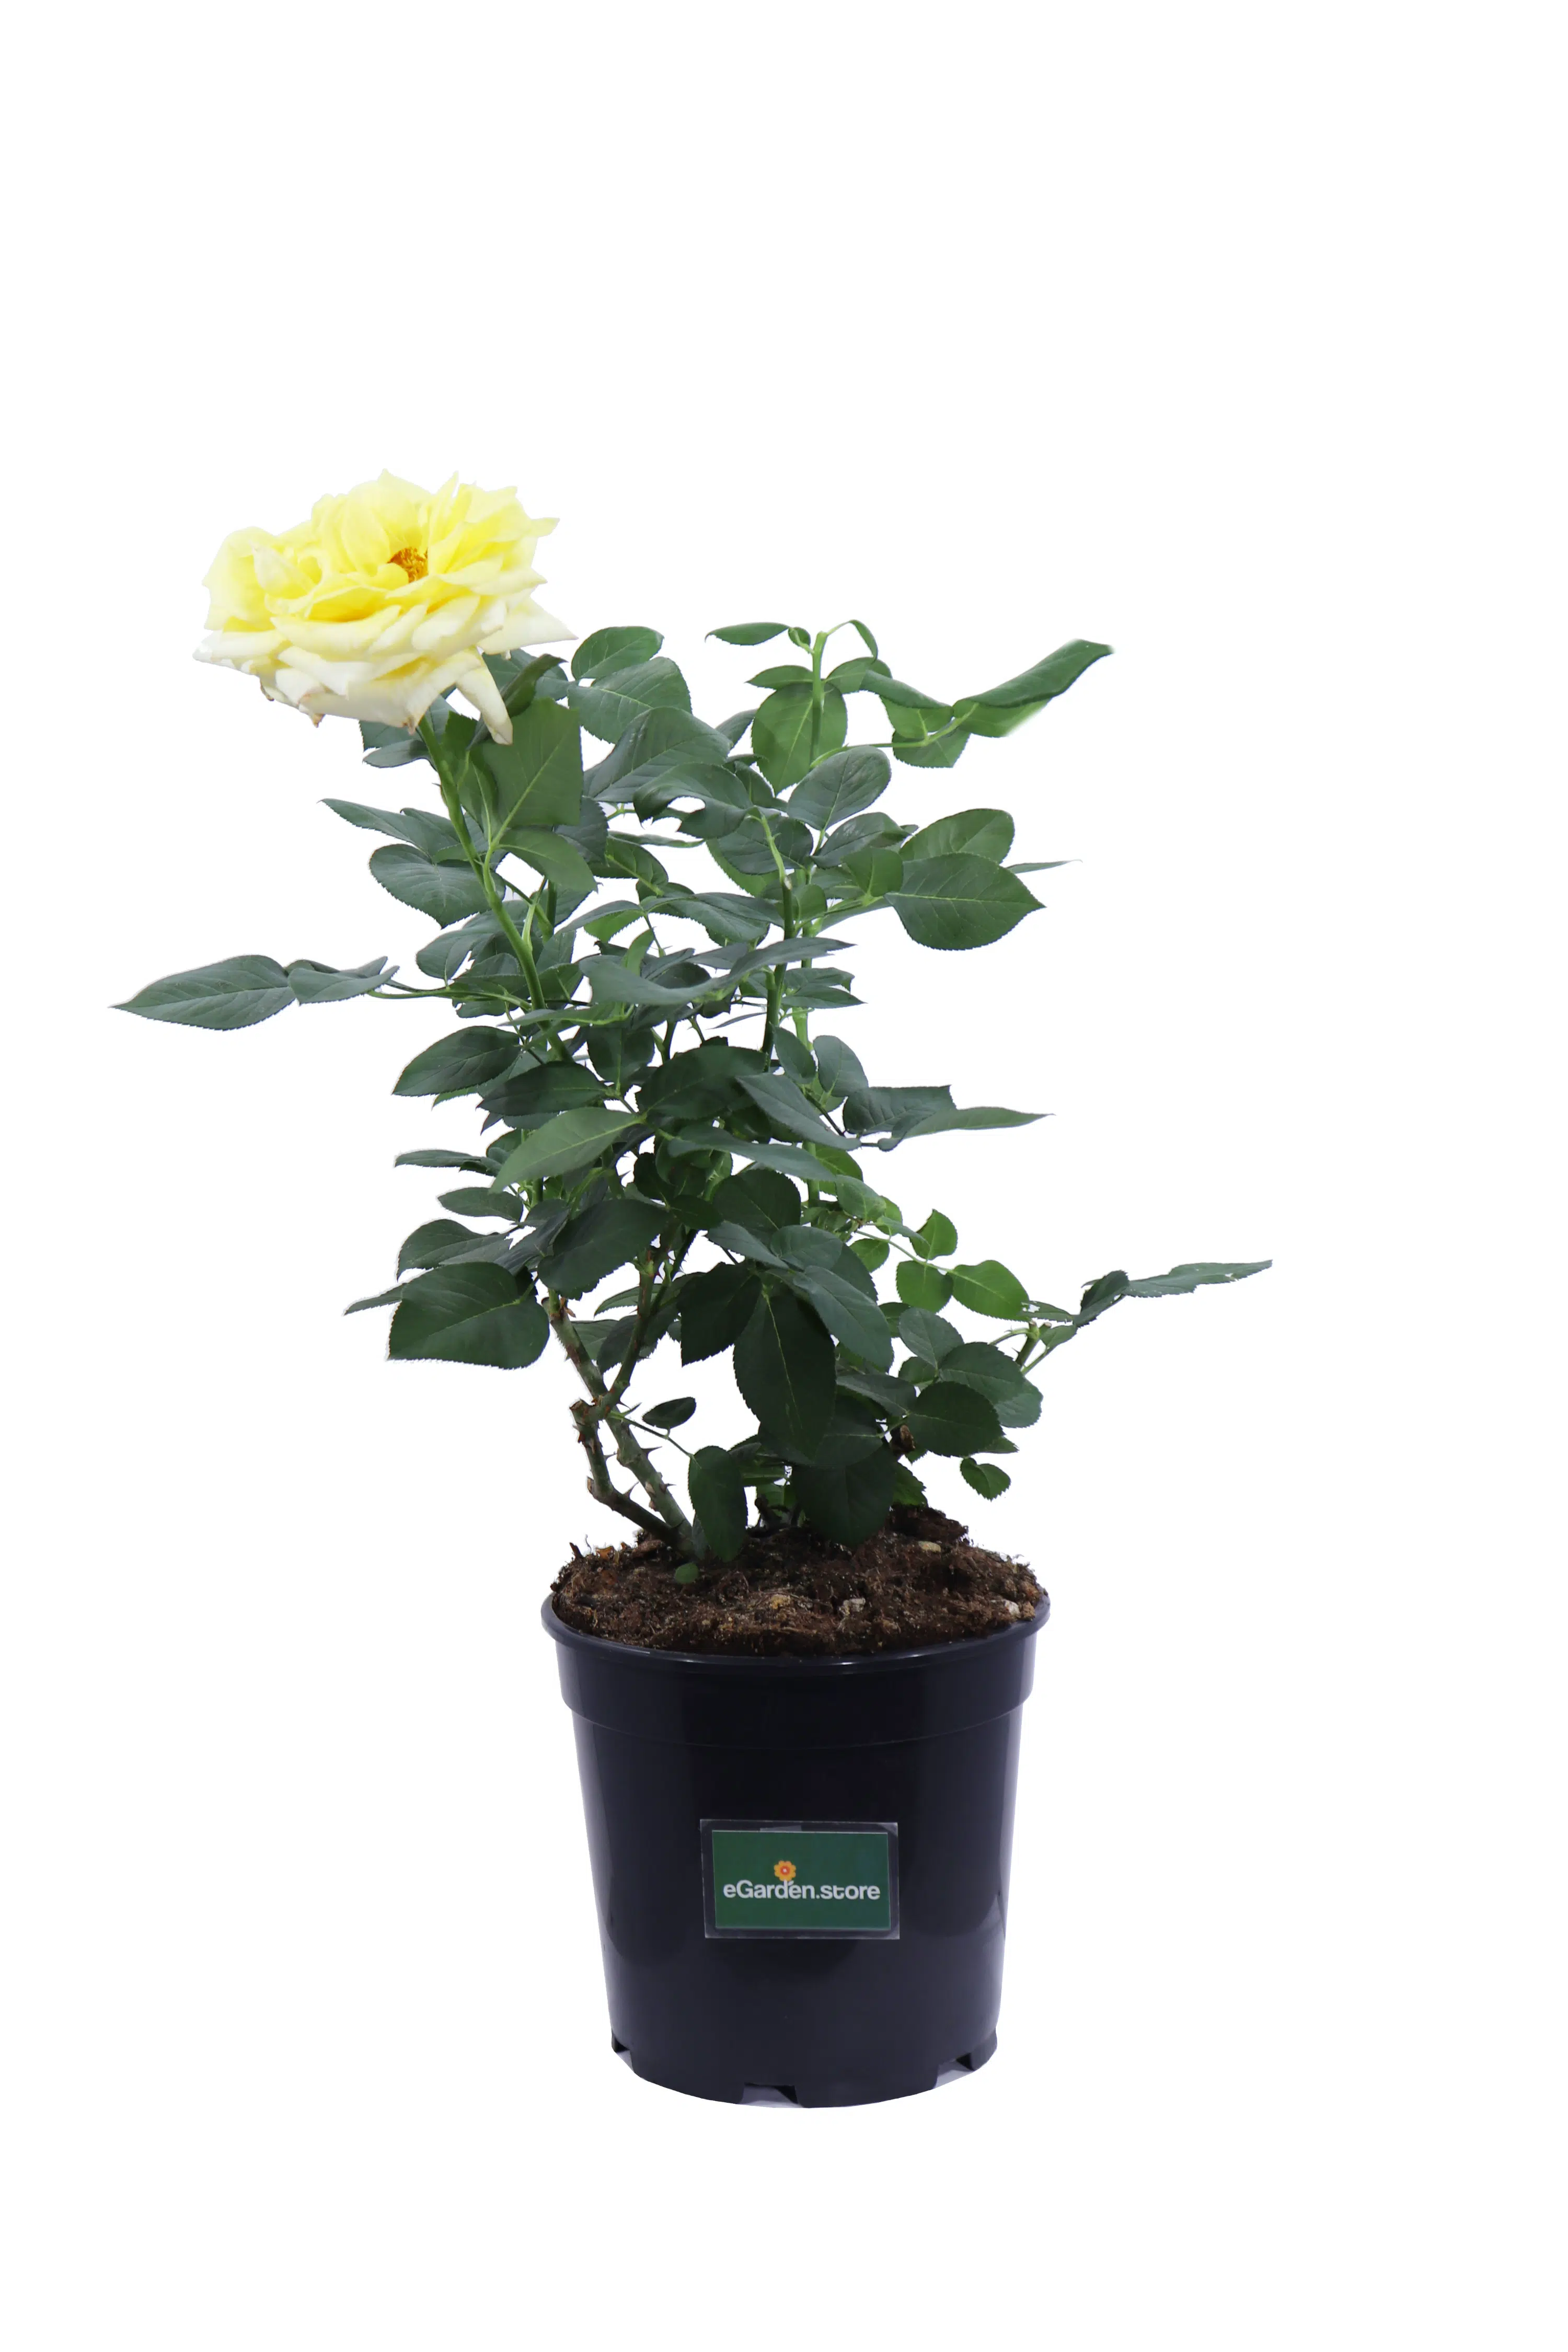 Rosa Grandiflora Gialla v21 egarden.store online